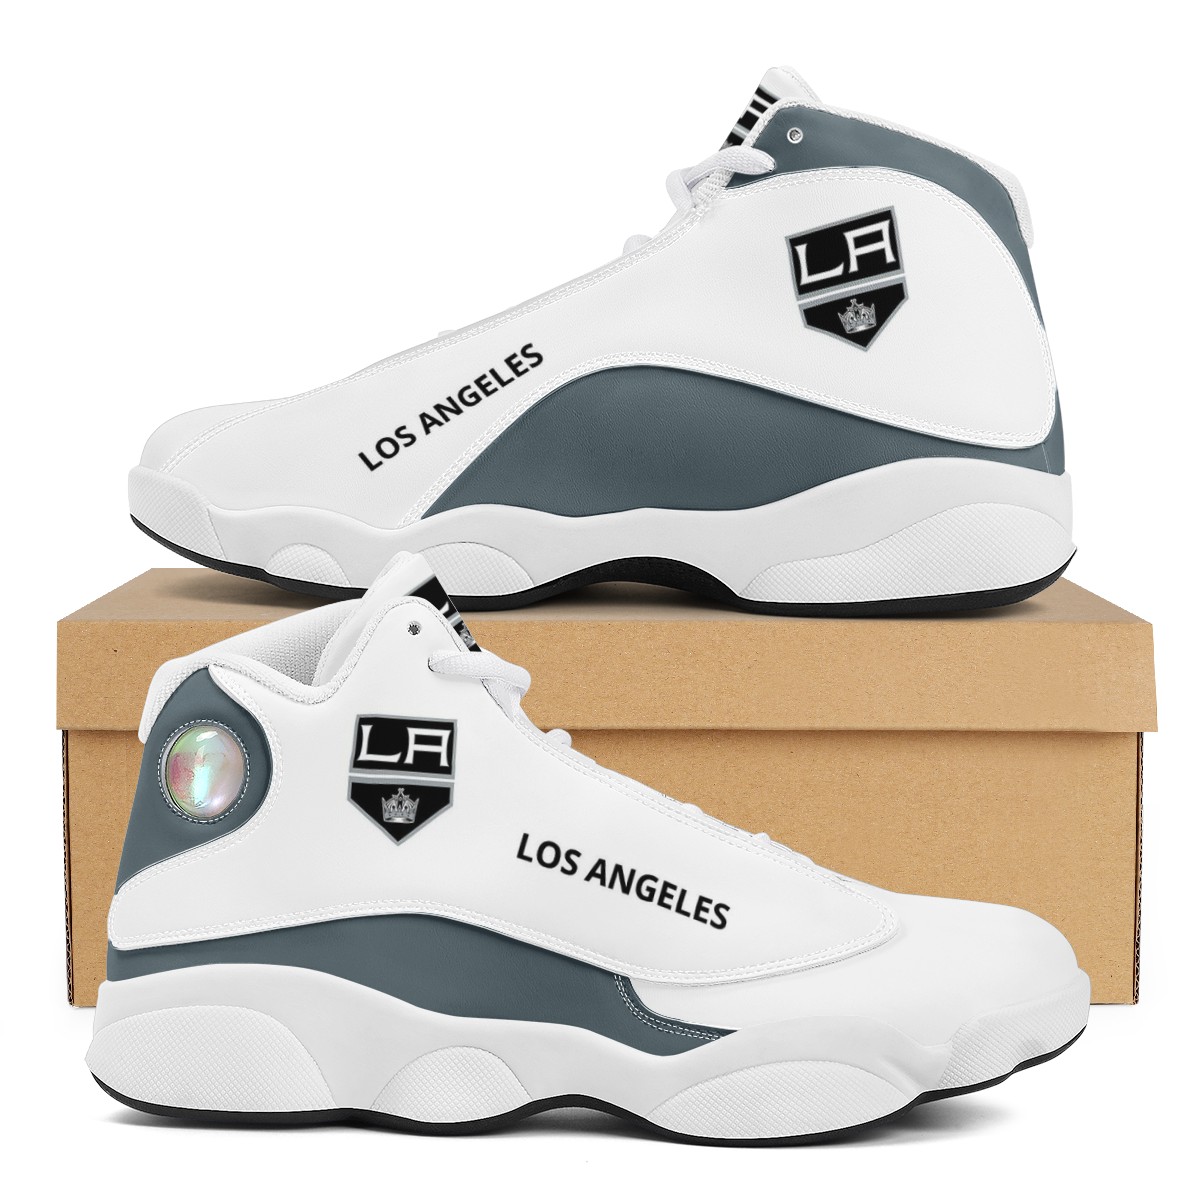 Men's Los Angeles Kings Limited Edition JD13 Sneakers 001